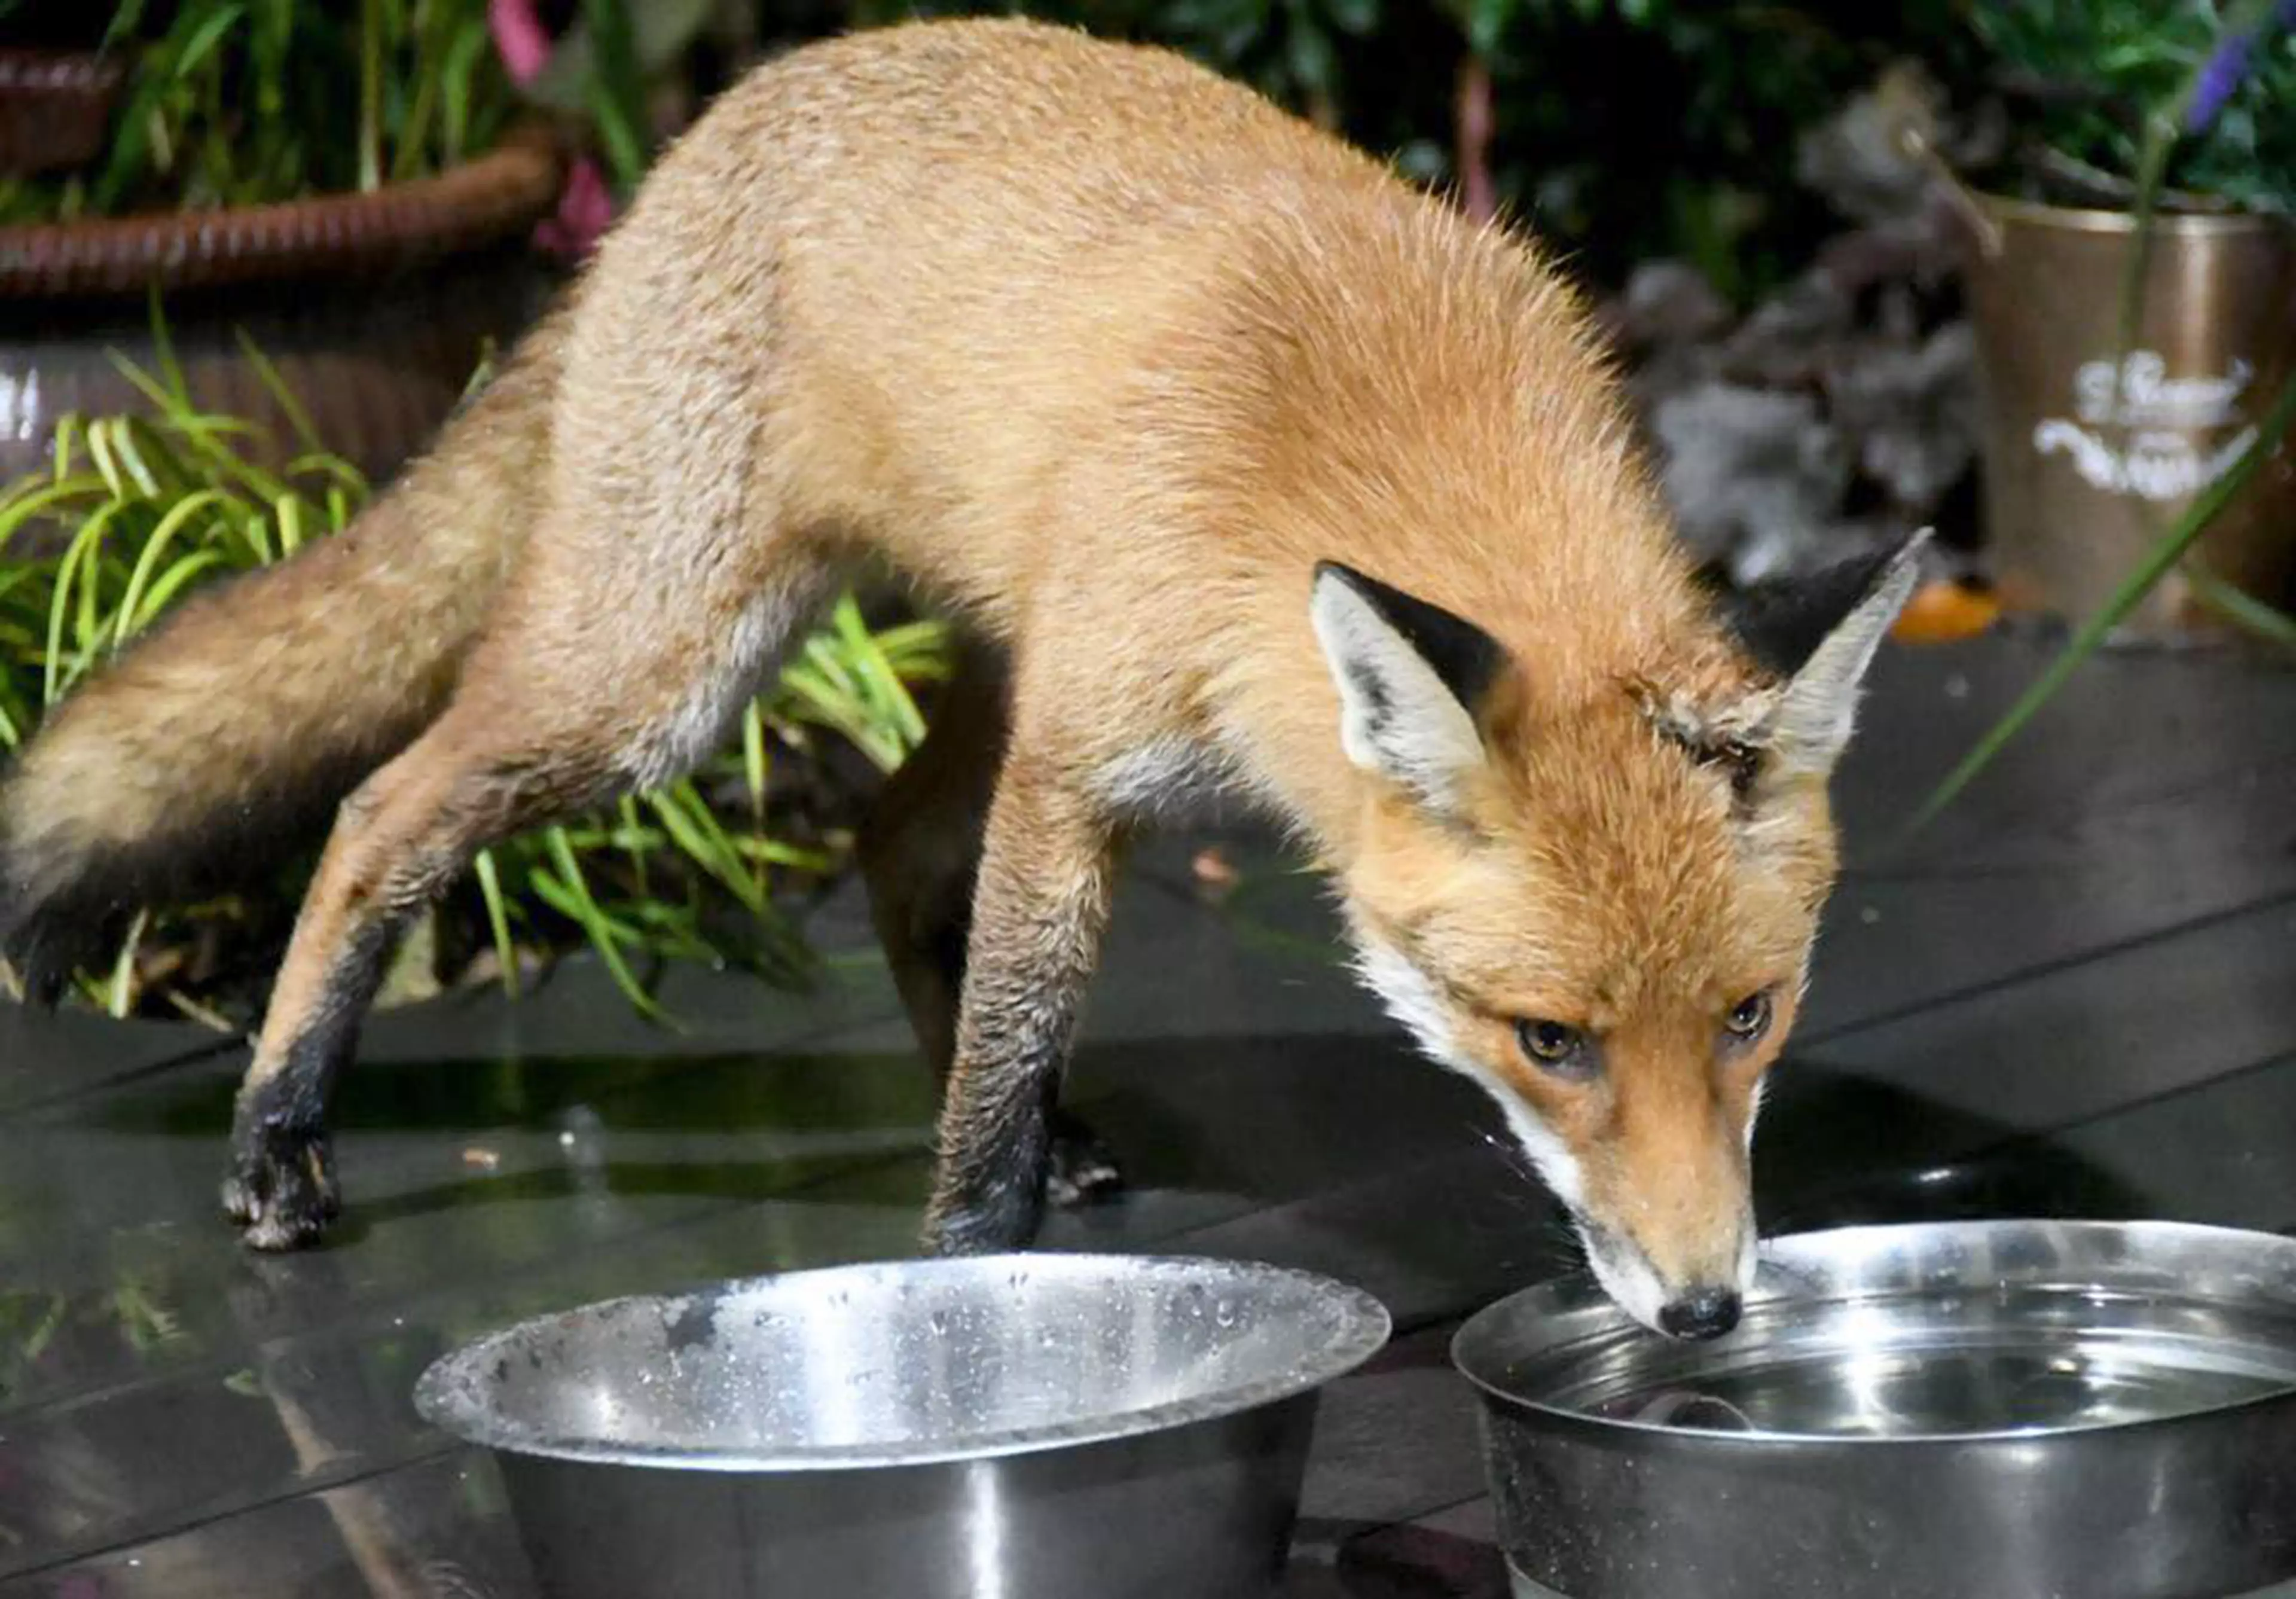 Christine now gets fox visitors around too. (